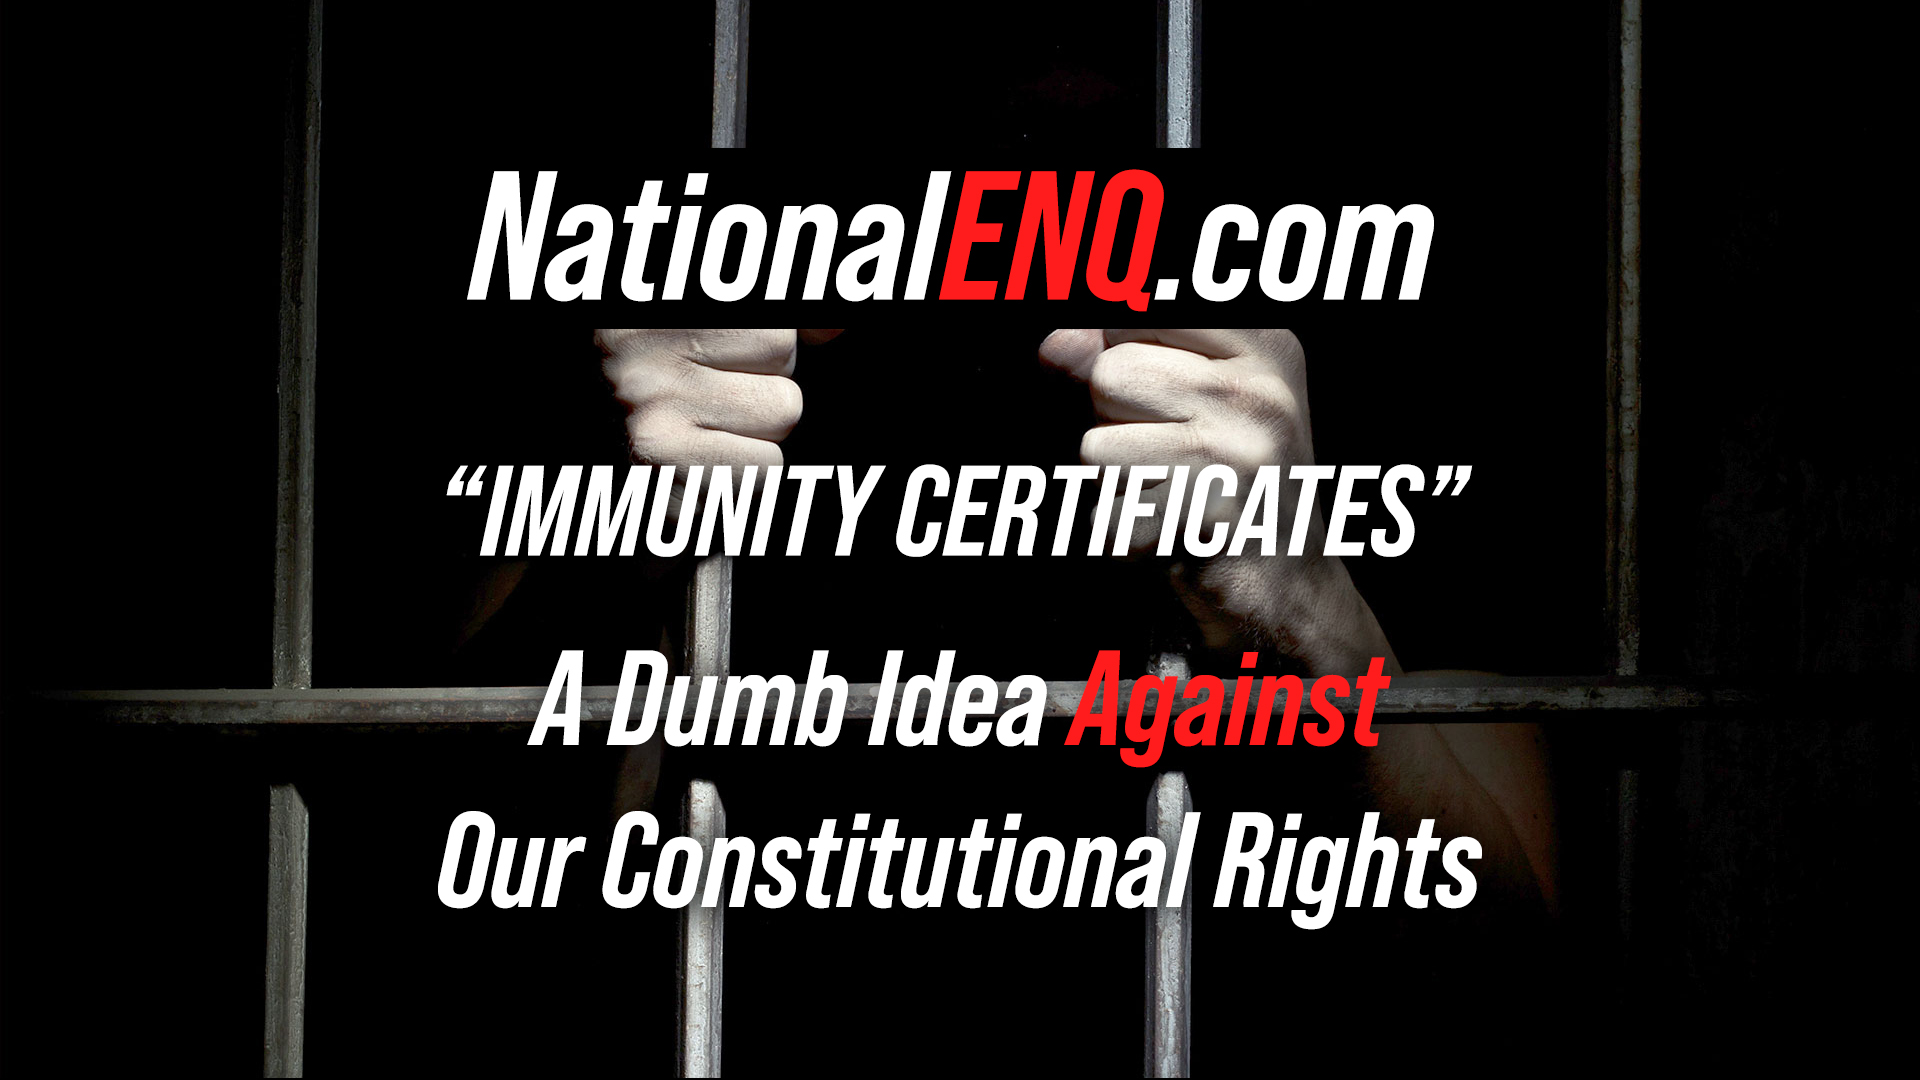 National ENQ News: Coronavirus Mass Tests & COVID-19 “Certificates of Immunity”, a Dumb Idea, as Freedom Is an Undisputable Right